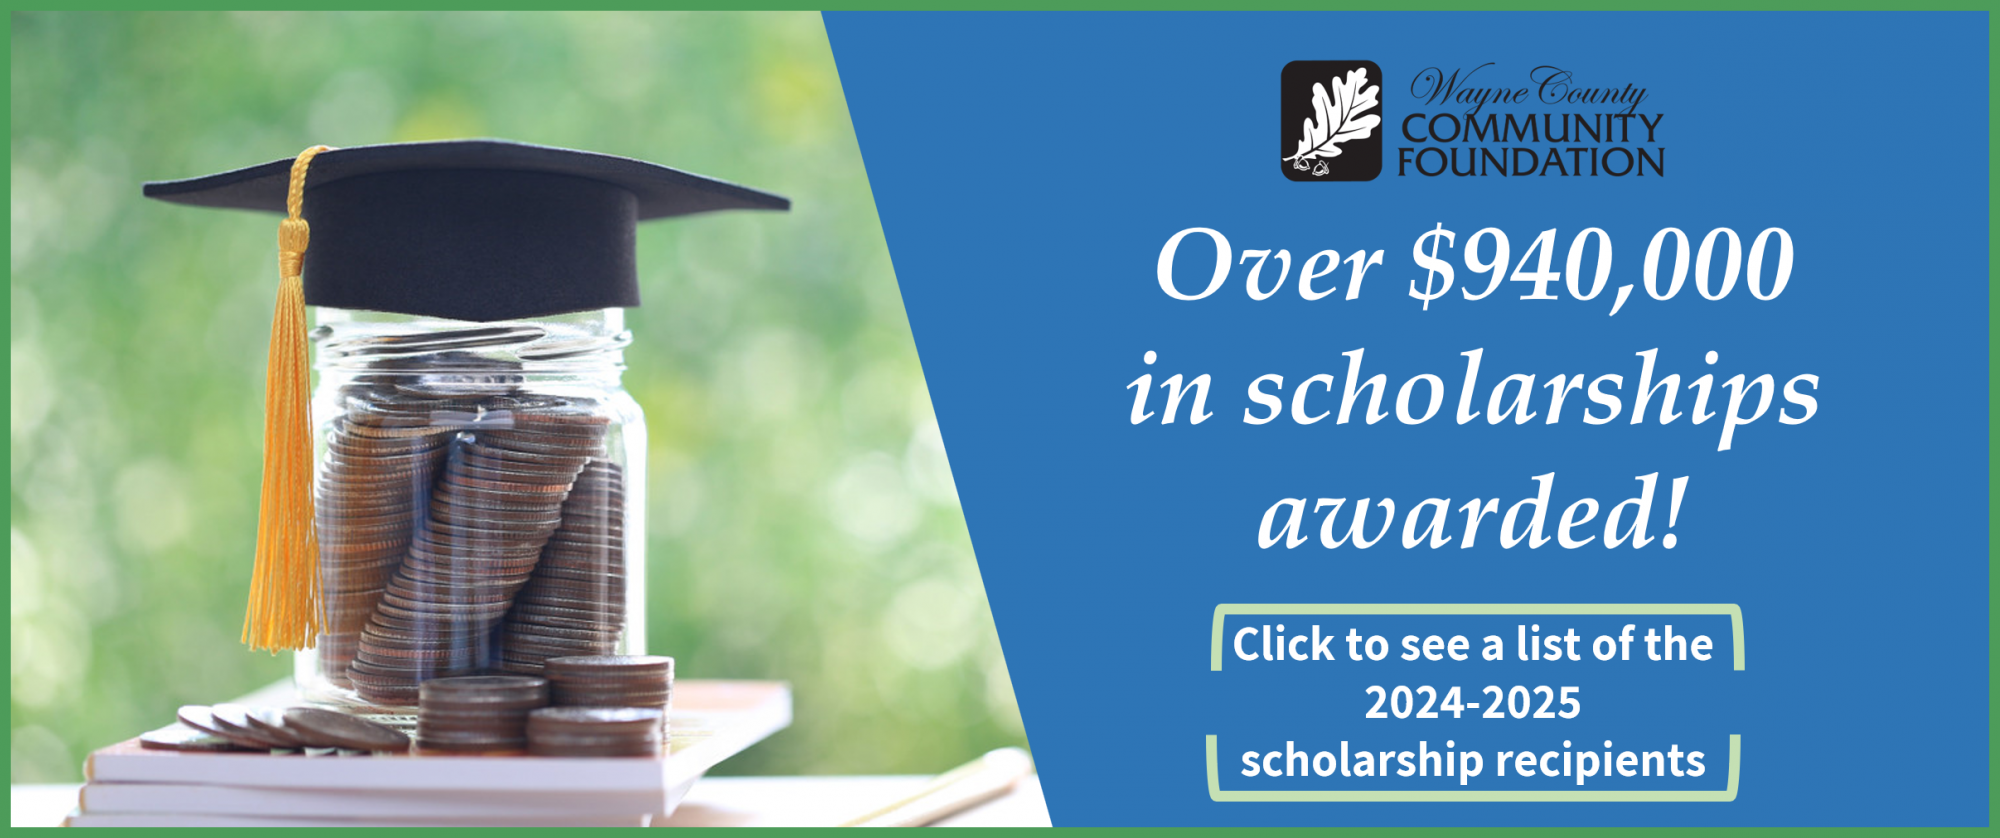 Scholarships Awarded